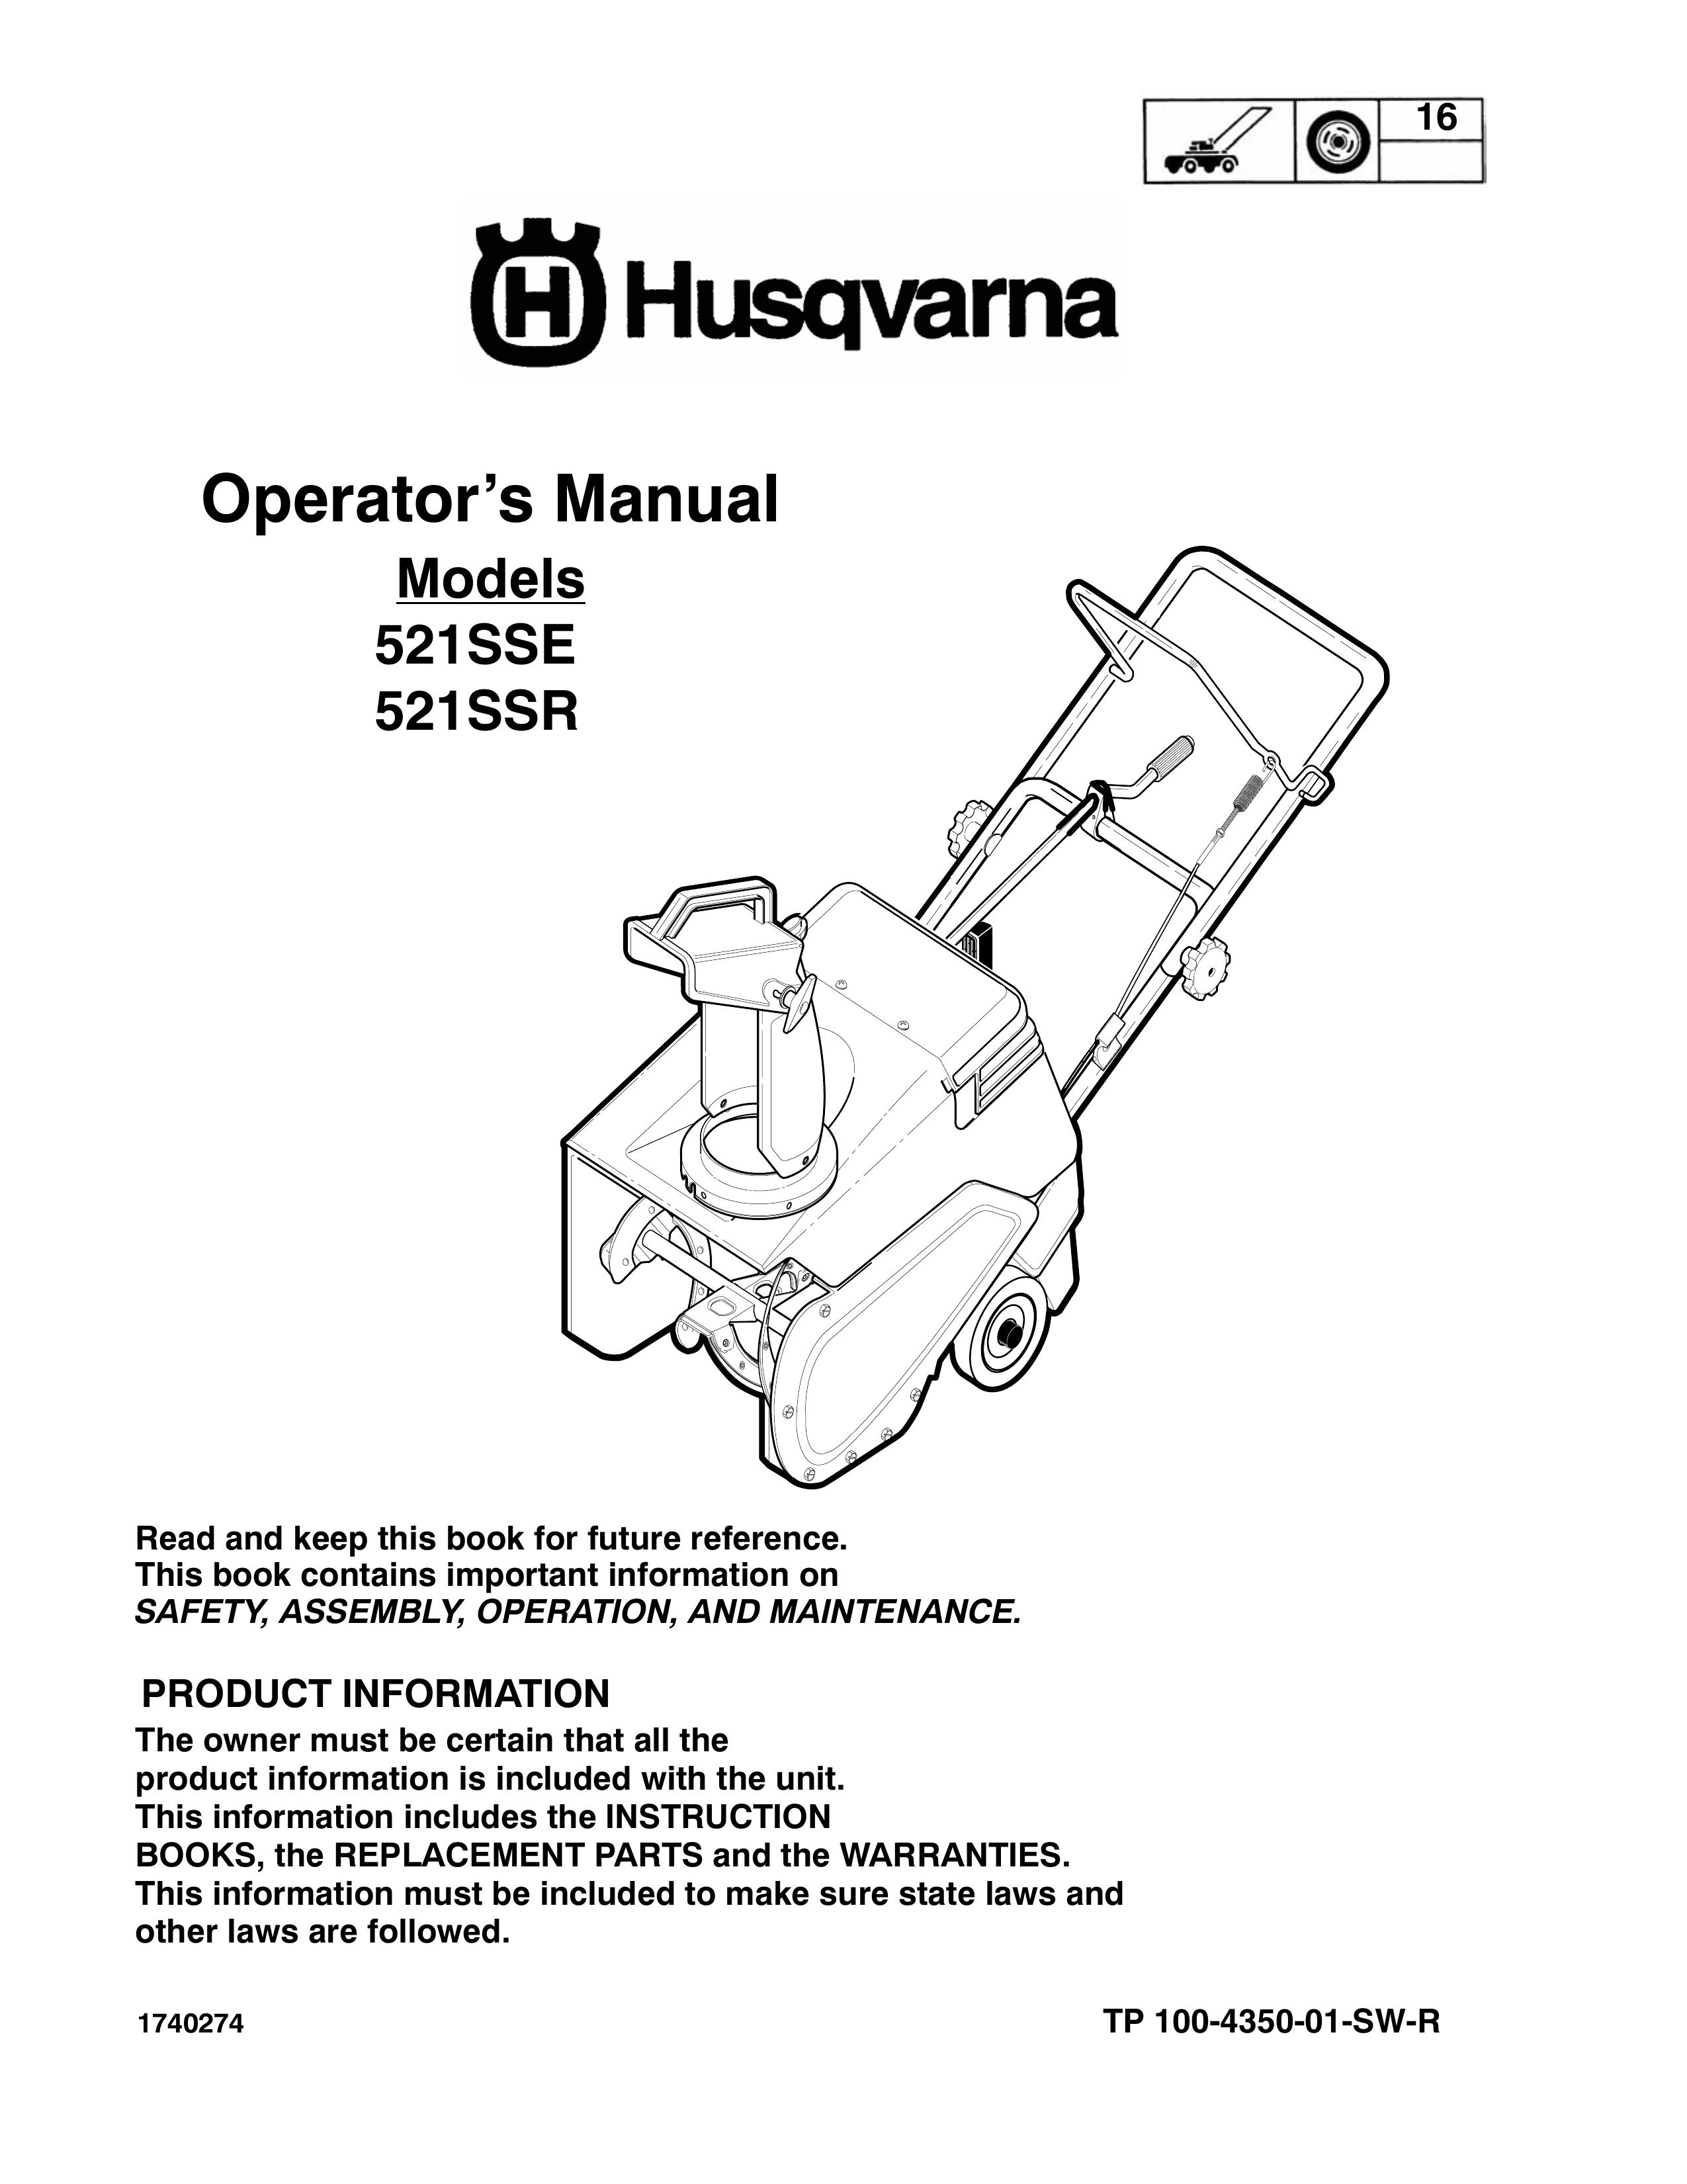 Husqvarna 521SSE Snow Blower User Manual